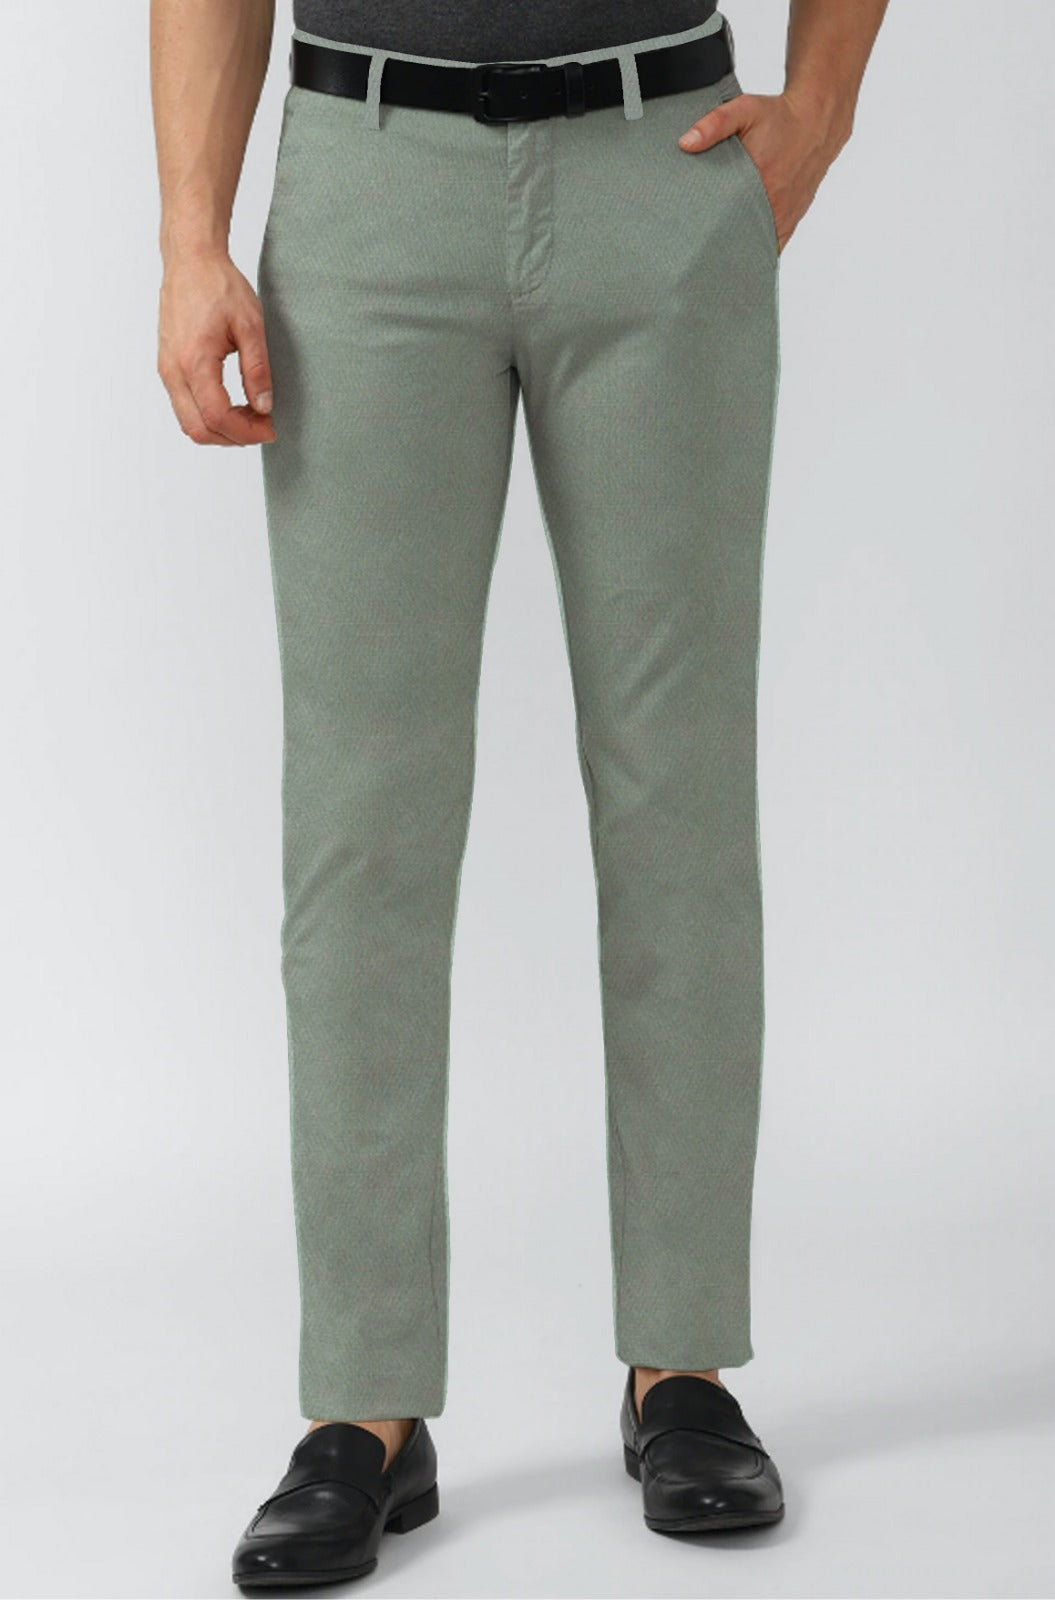 fcity.in - Trendy Lycra Pants / Ravishing Unique Men Trousers